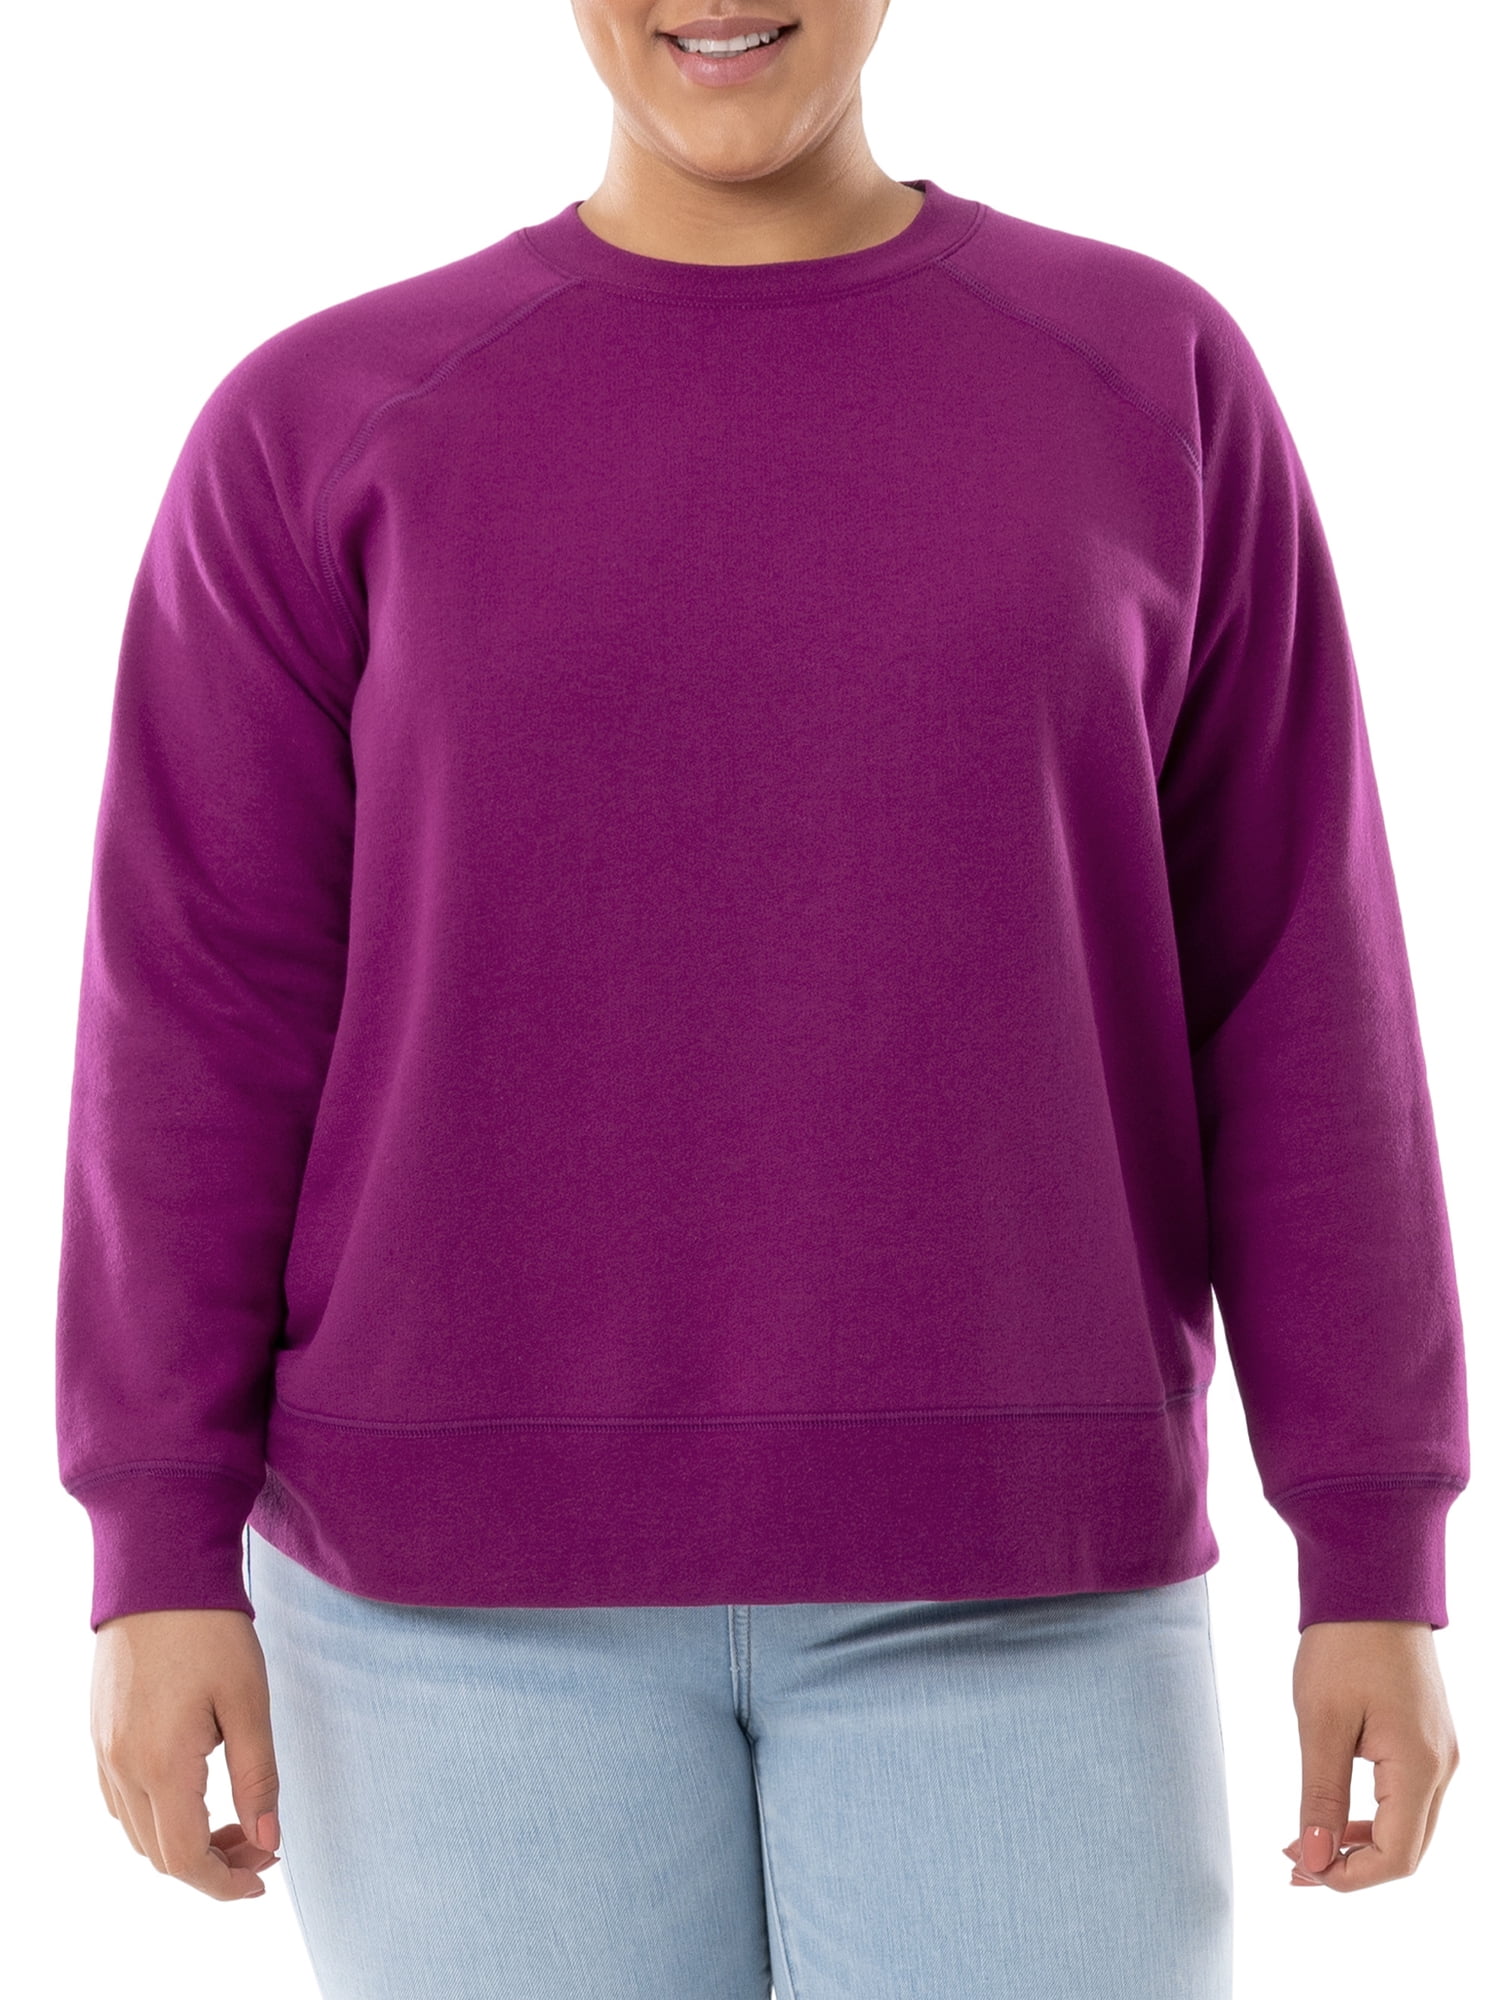 Terra & Sky Women's Plus Size Fleece Sweatshirt